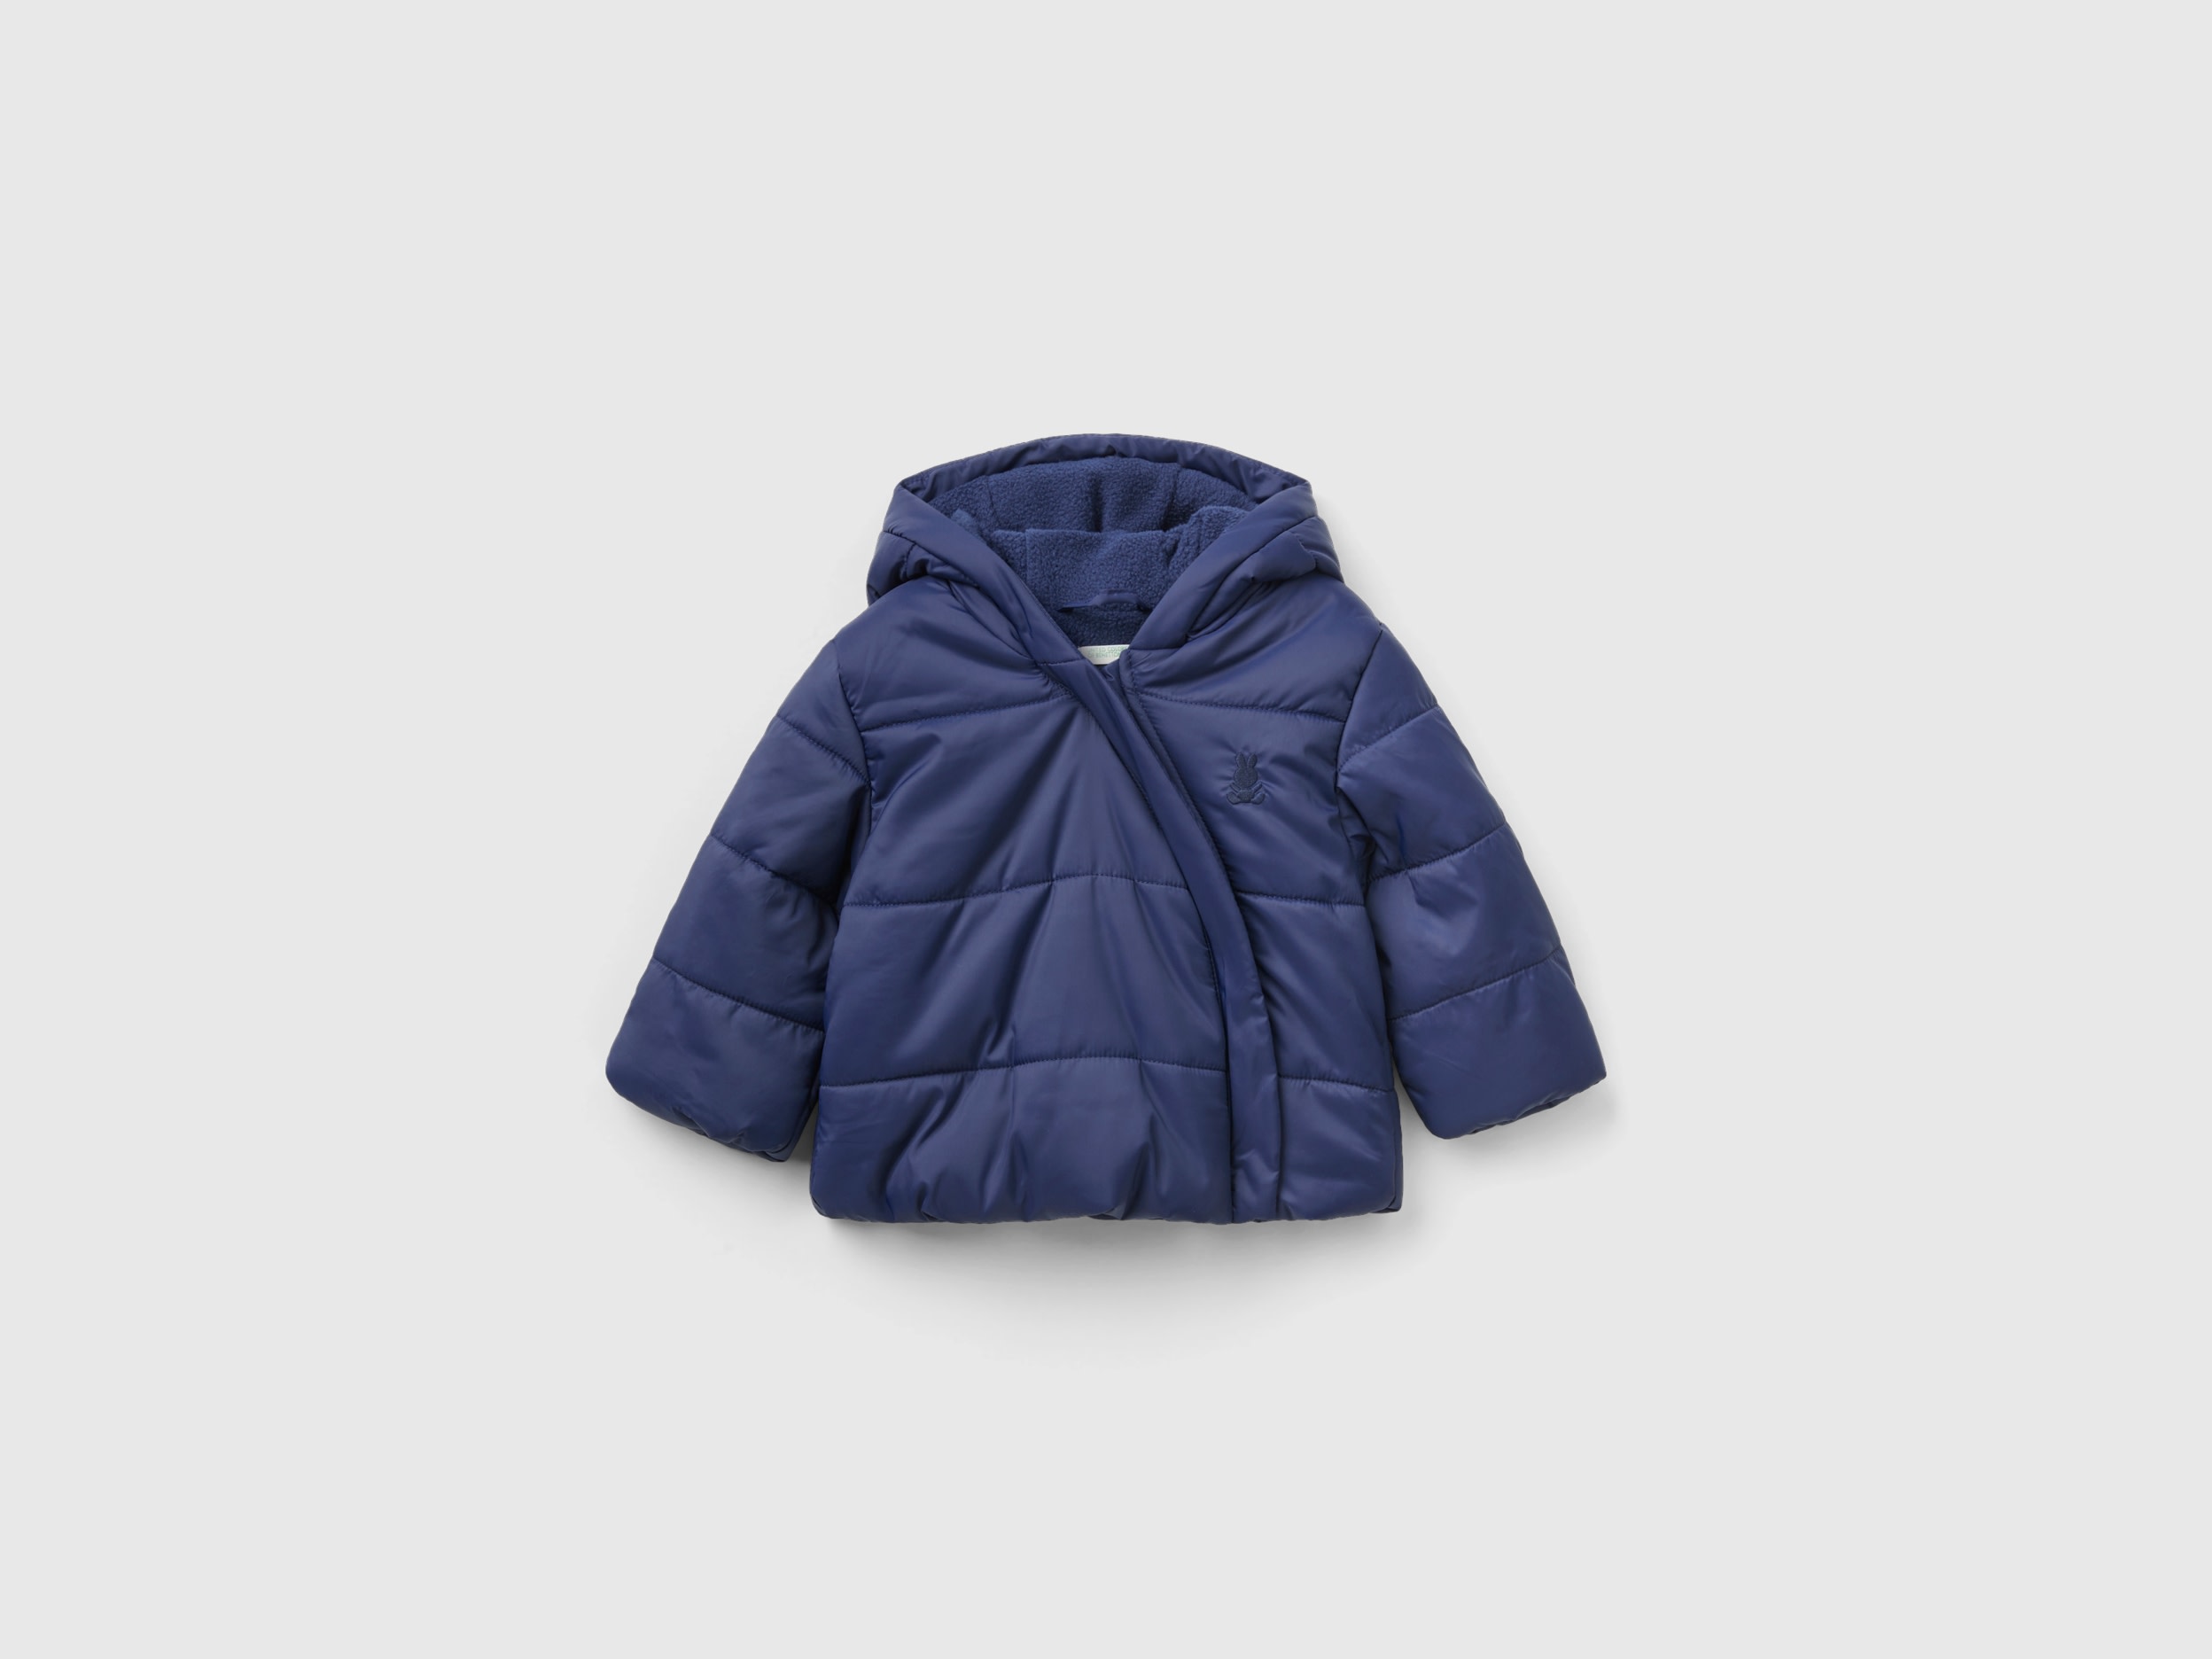 Benetton, Padded Jacket With Hood, size 9-12, Dark Blue, Kids